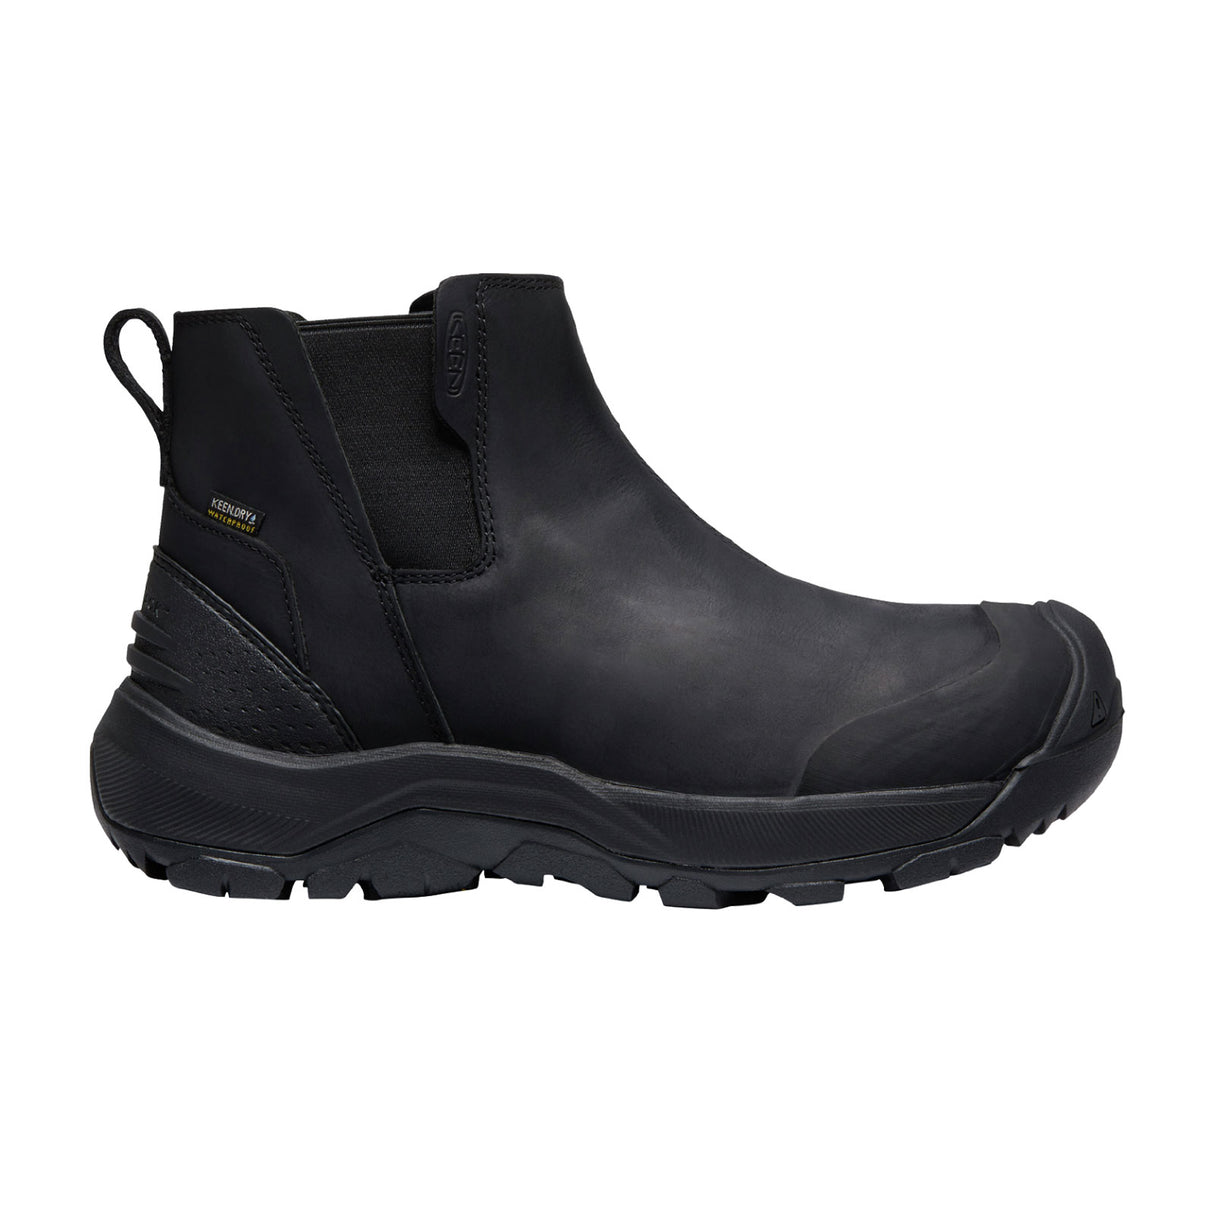 Keen Revel IV Chelsea Slip-on Ankle Boot (Men) - Black/Black Boots - Fashion - Chelsea Boot - The Heel Shoe Fitters